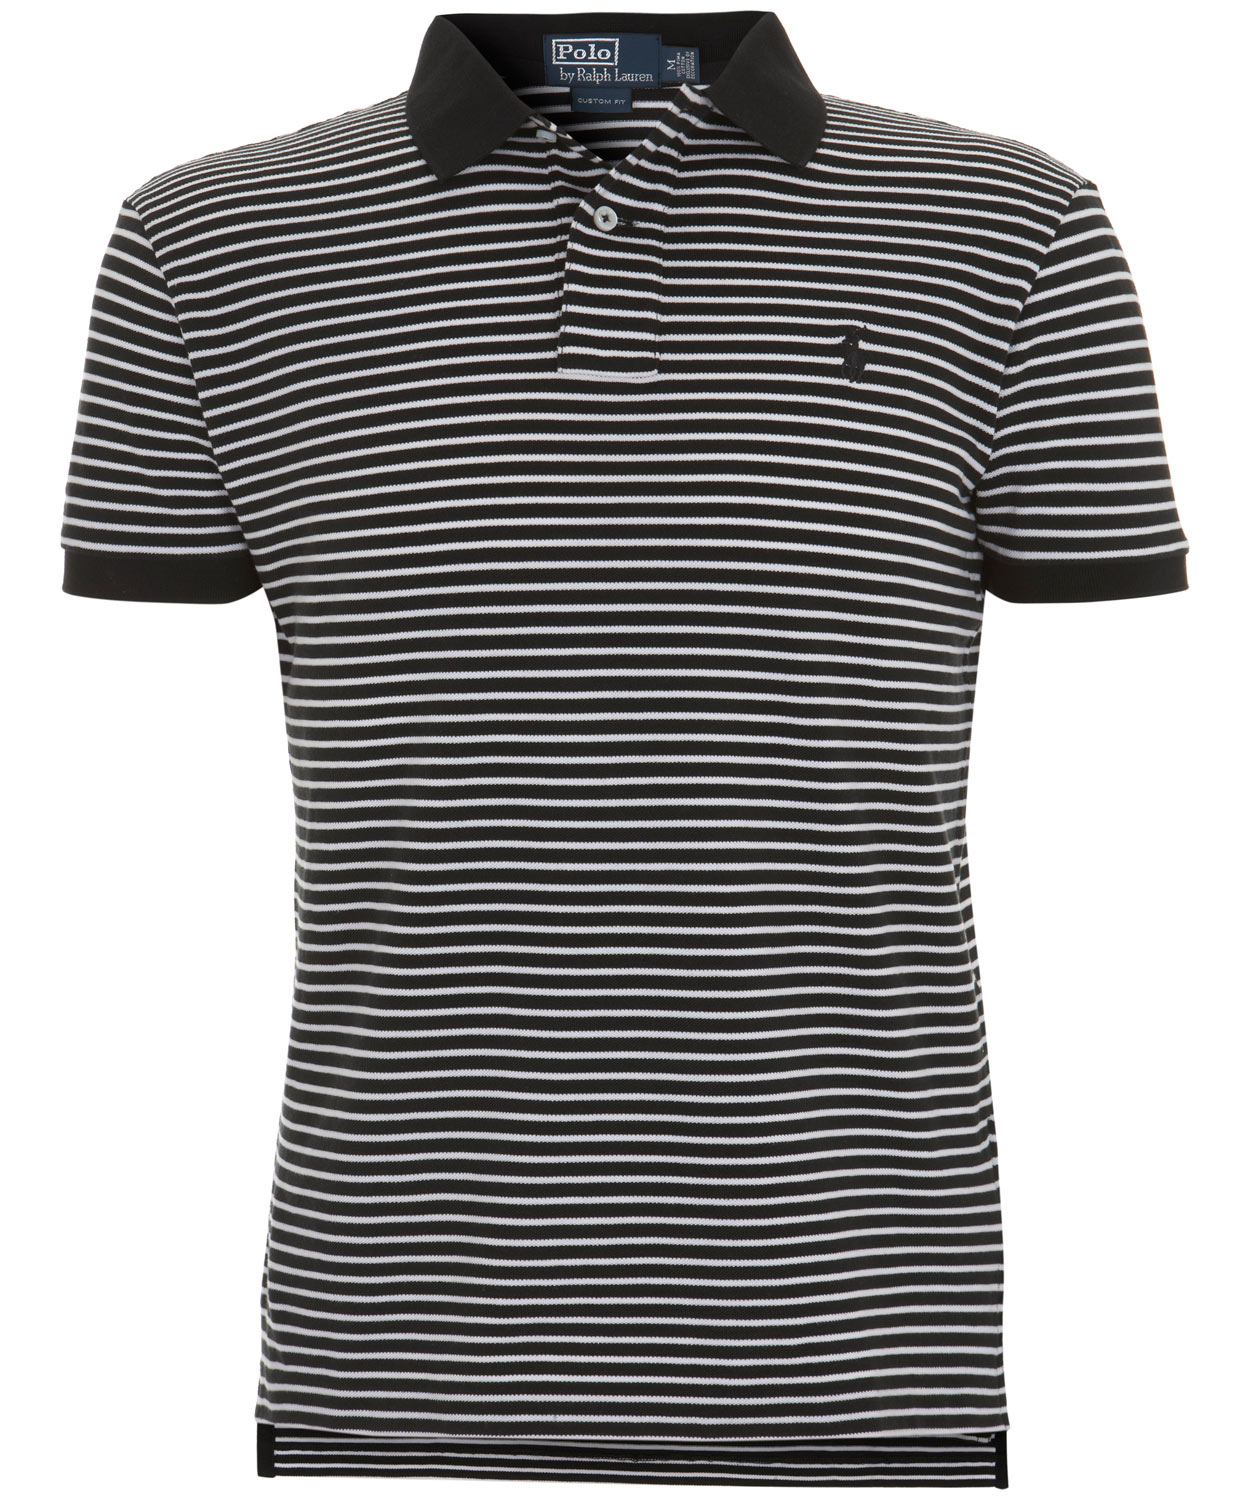 ralph lauren black and white striped shirt